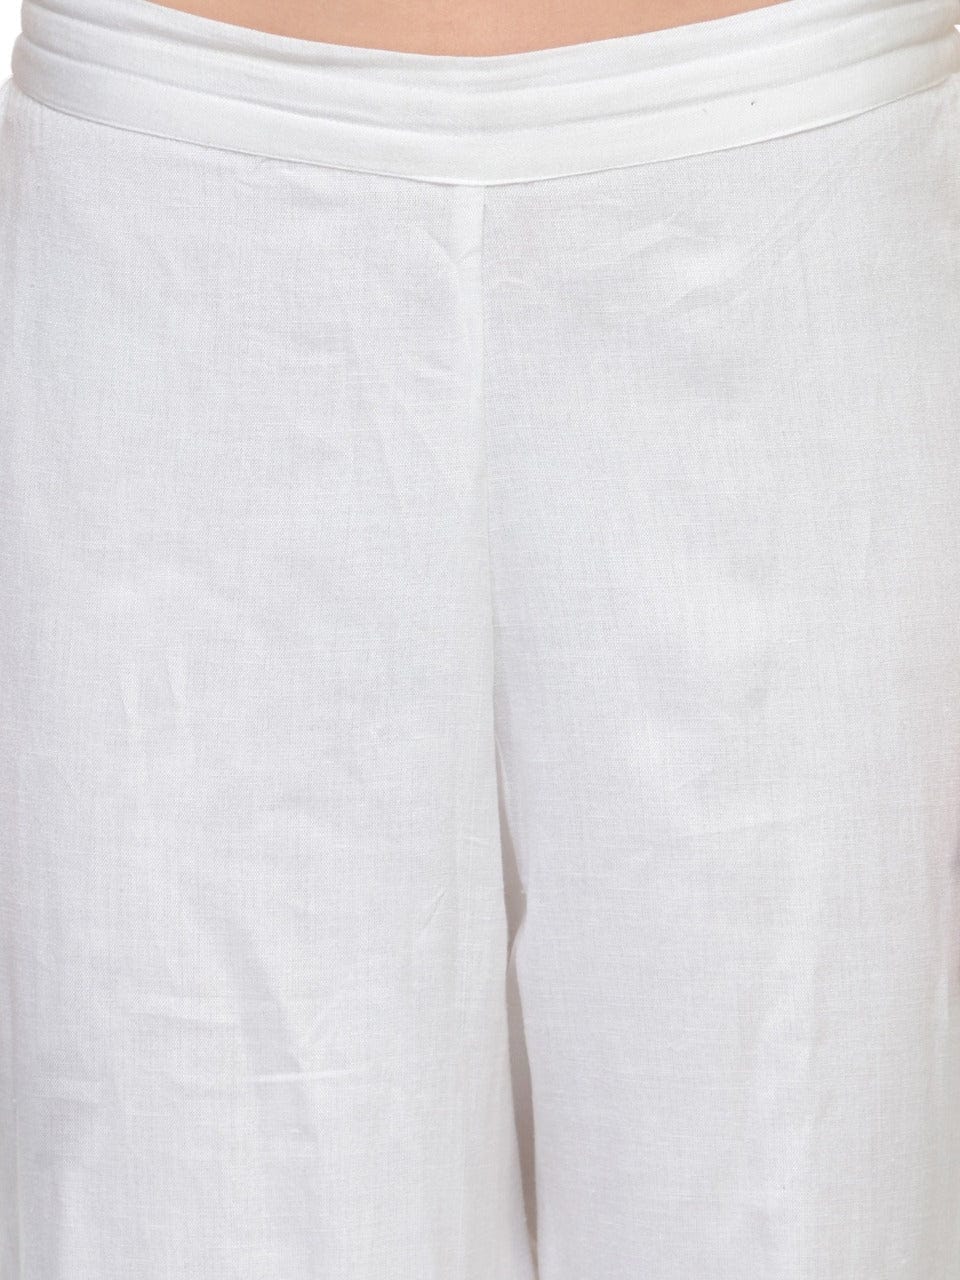 Women's White Ankle Lenths Pants - Varanga